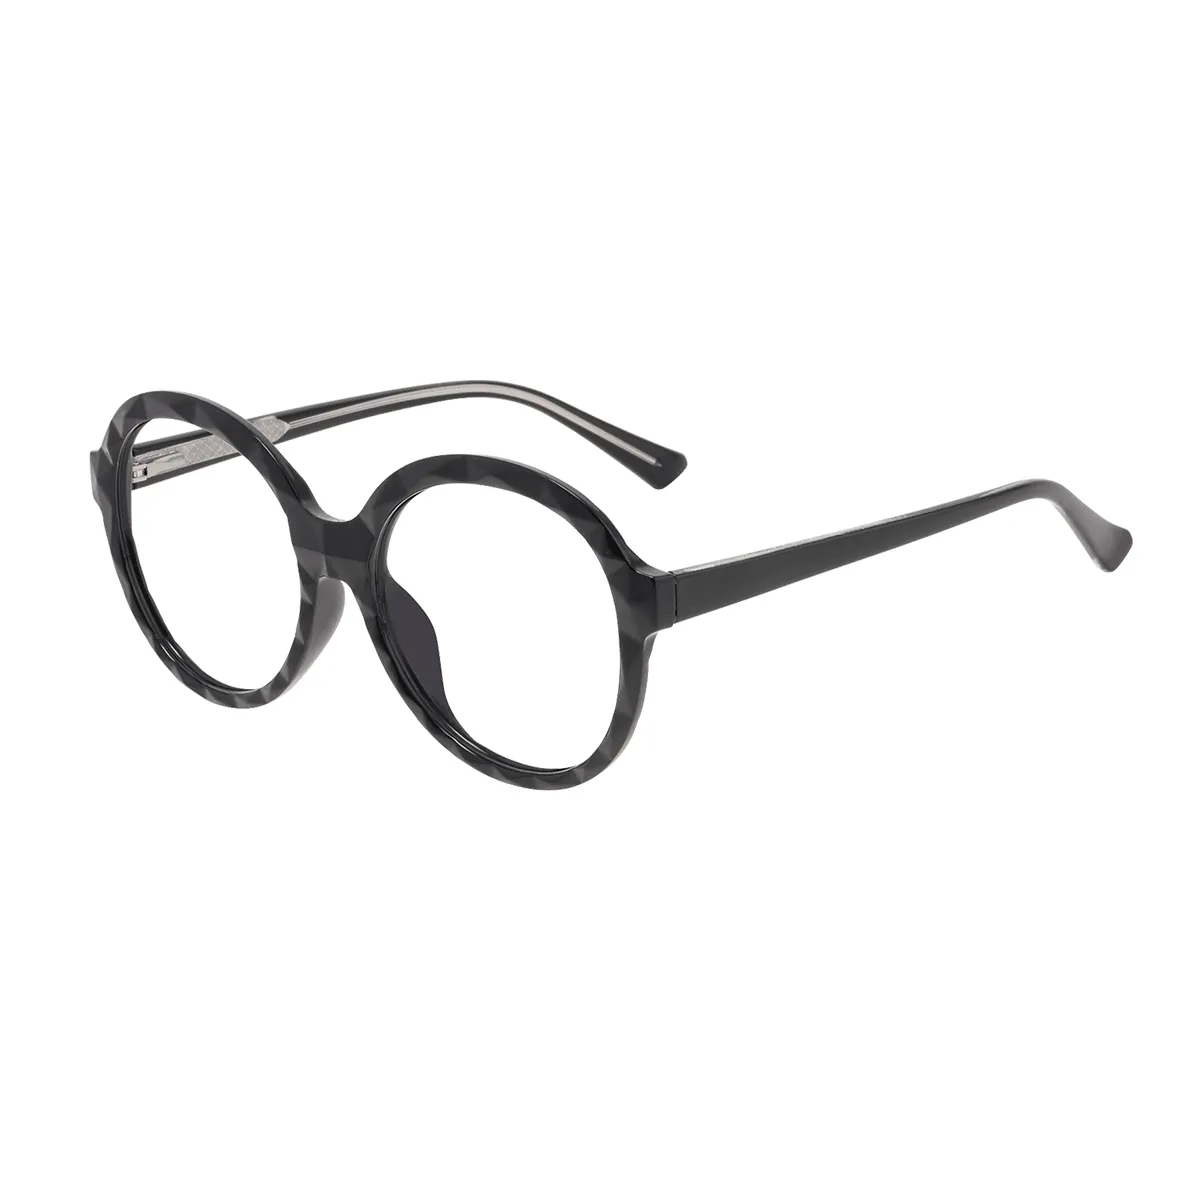 Ezra - Round Black Glasses for Women